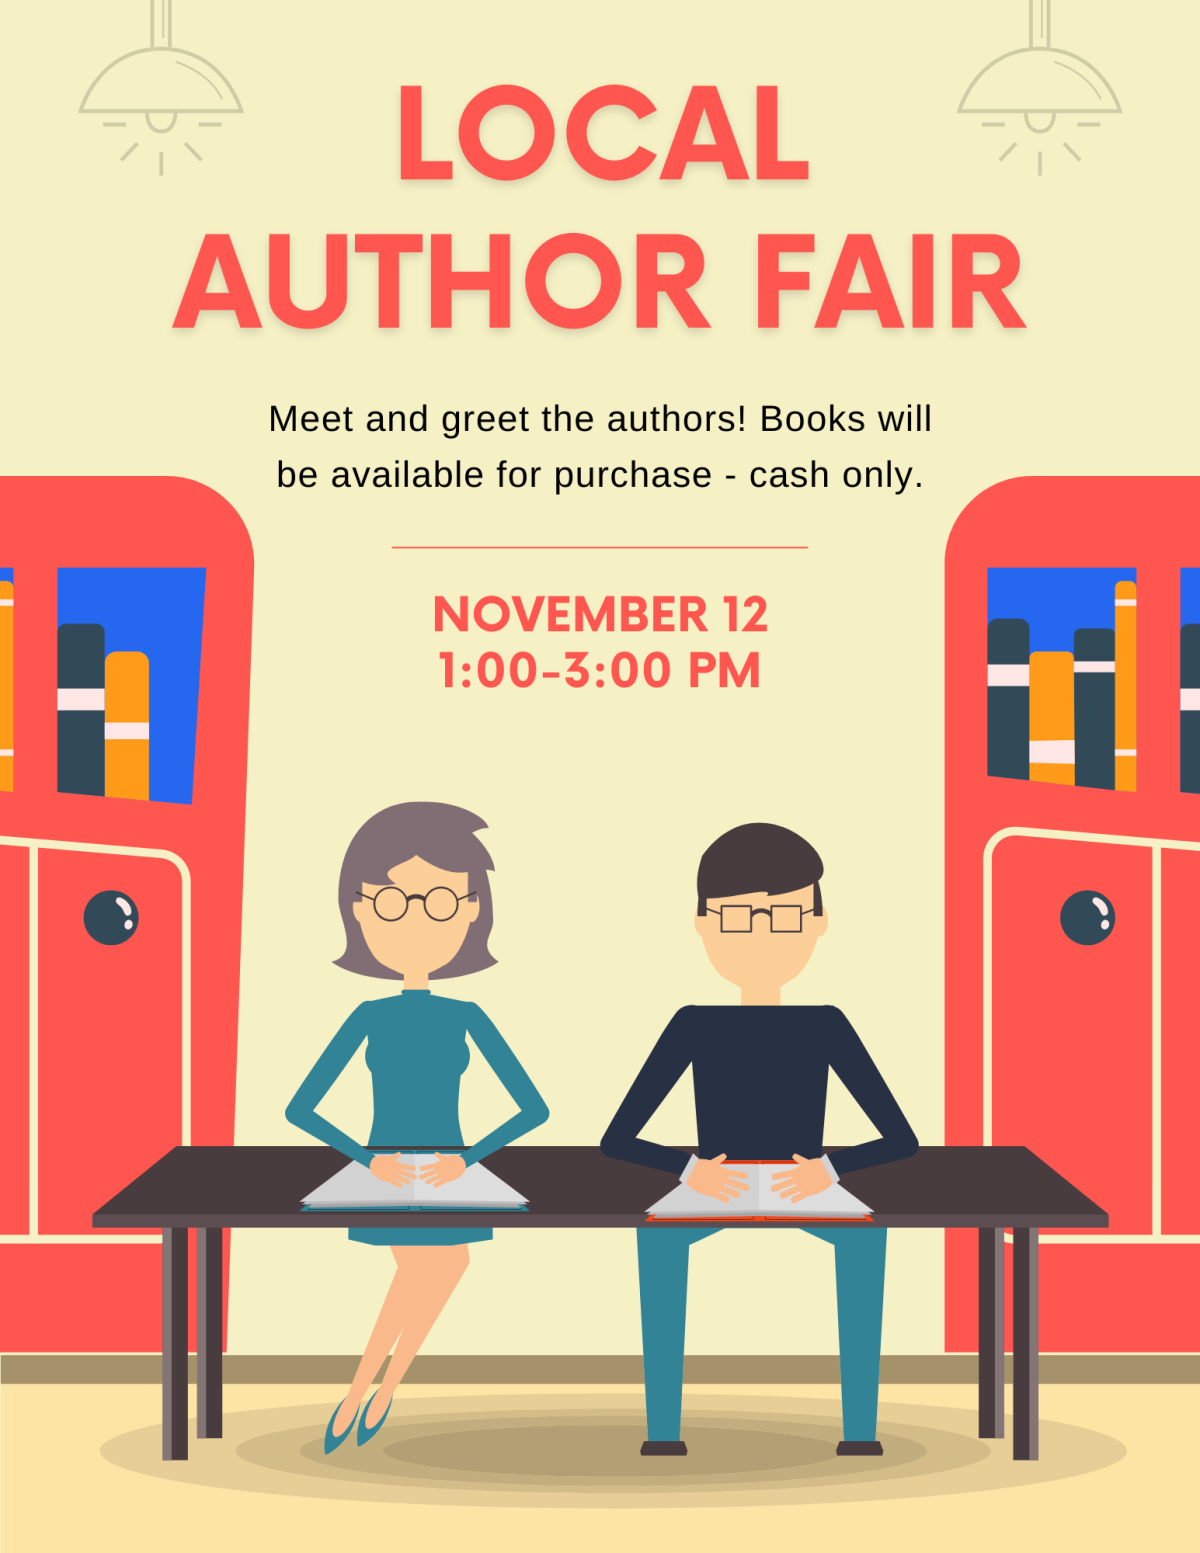 Local author fair November 13 1-3 p.m.